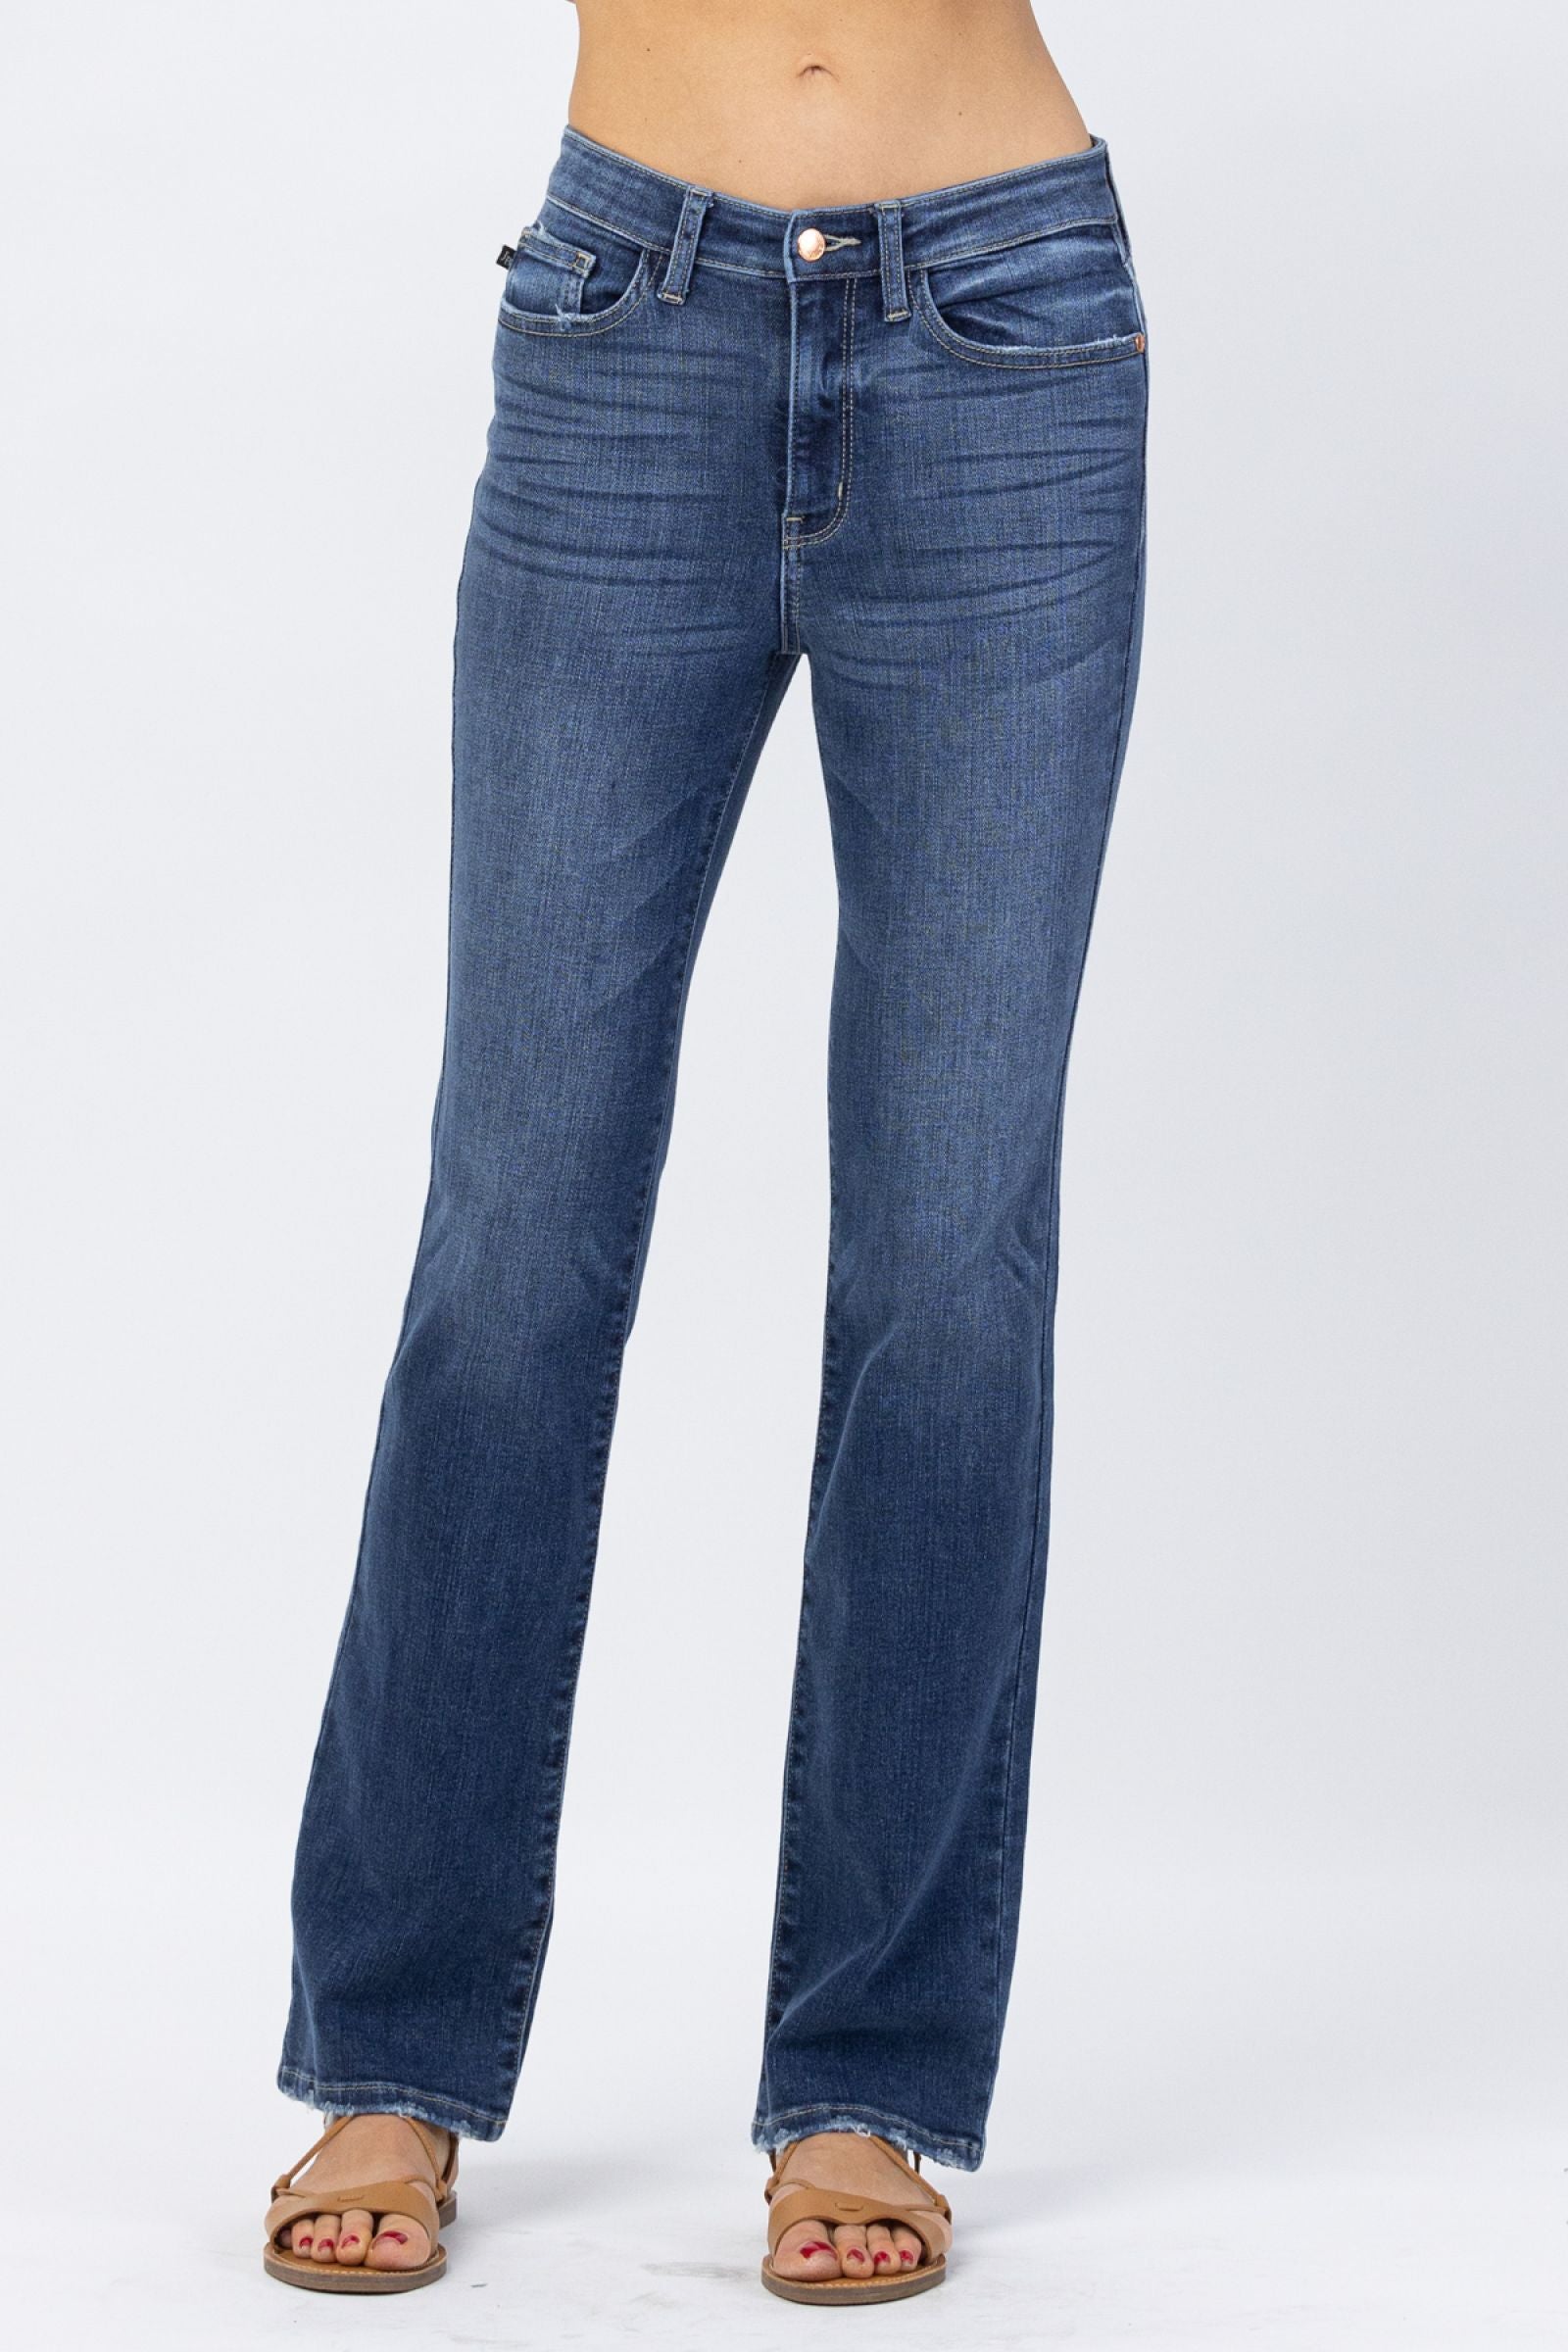 Judy Blue Non Distressed Bootcut Denim Jeans